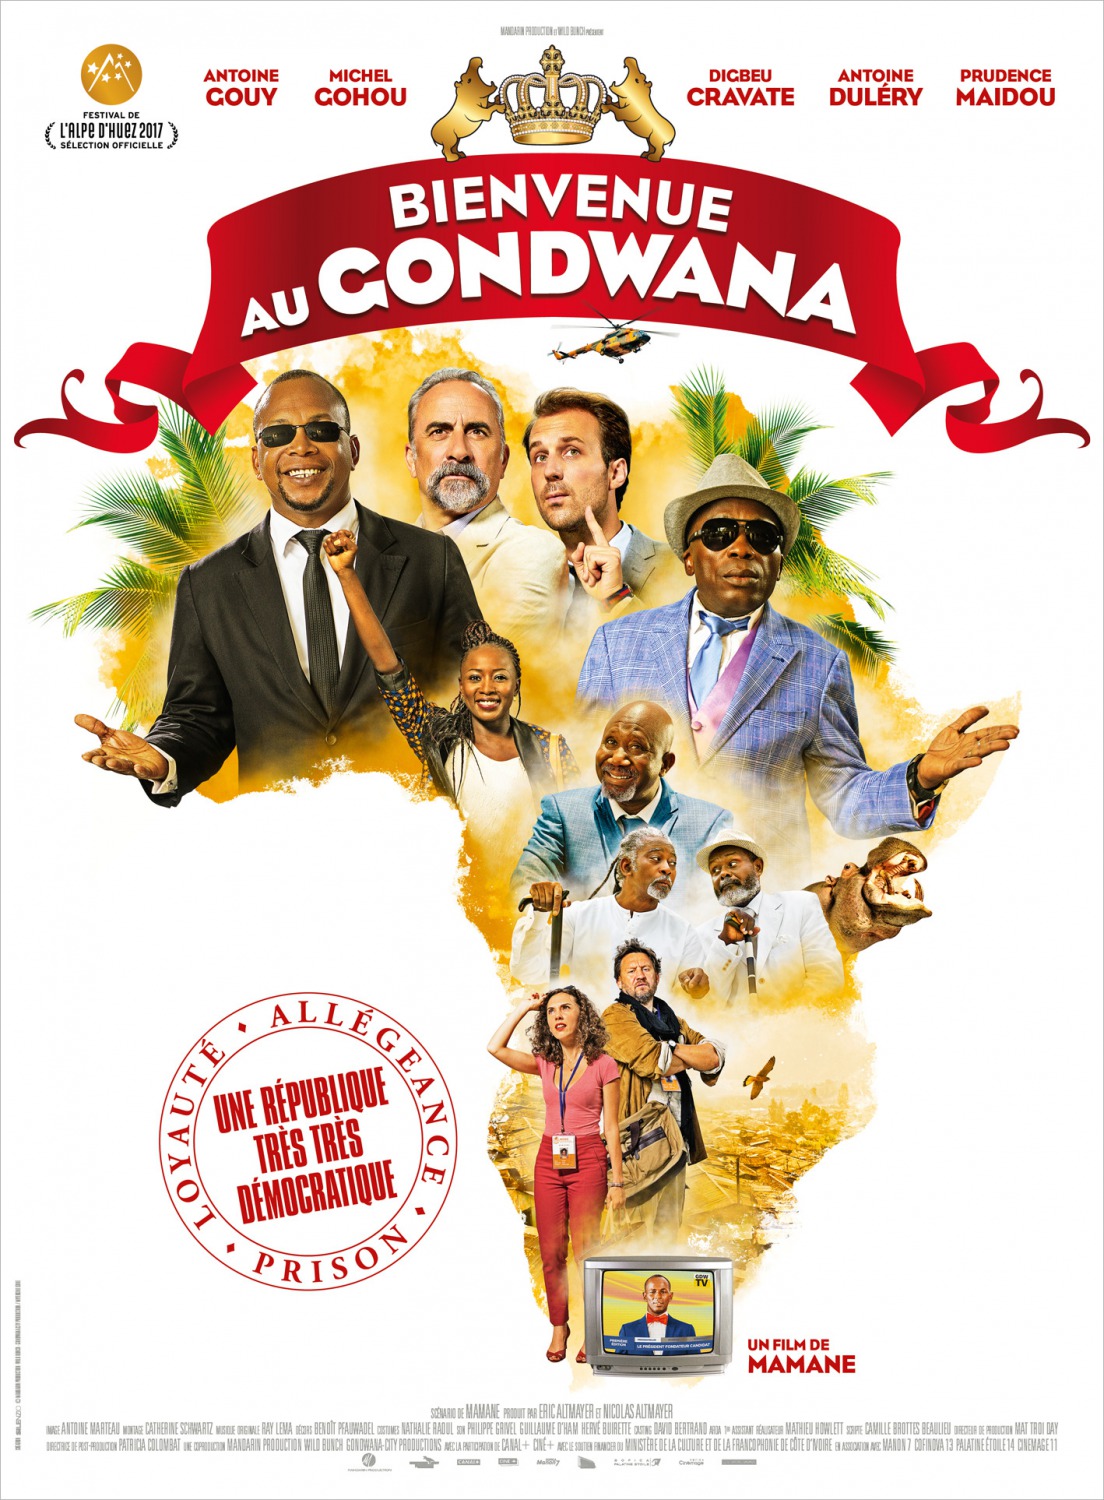 Extra Large Movie Poster Image for Bienvenue au Gondwana 